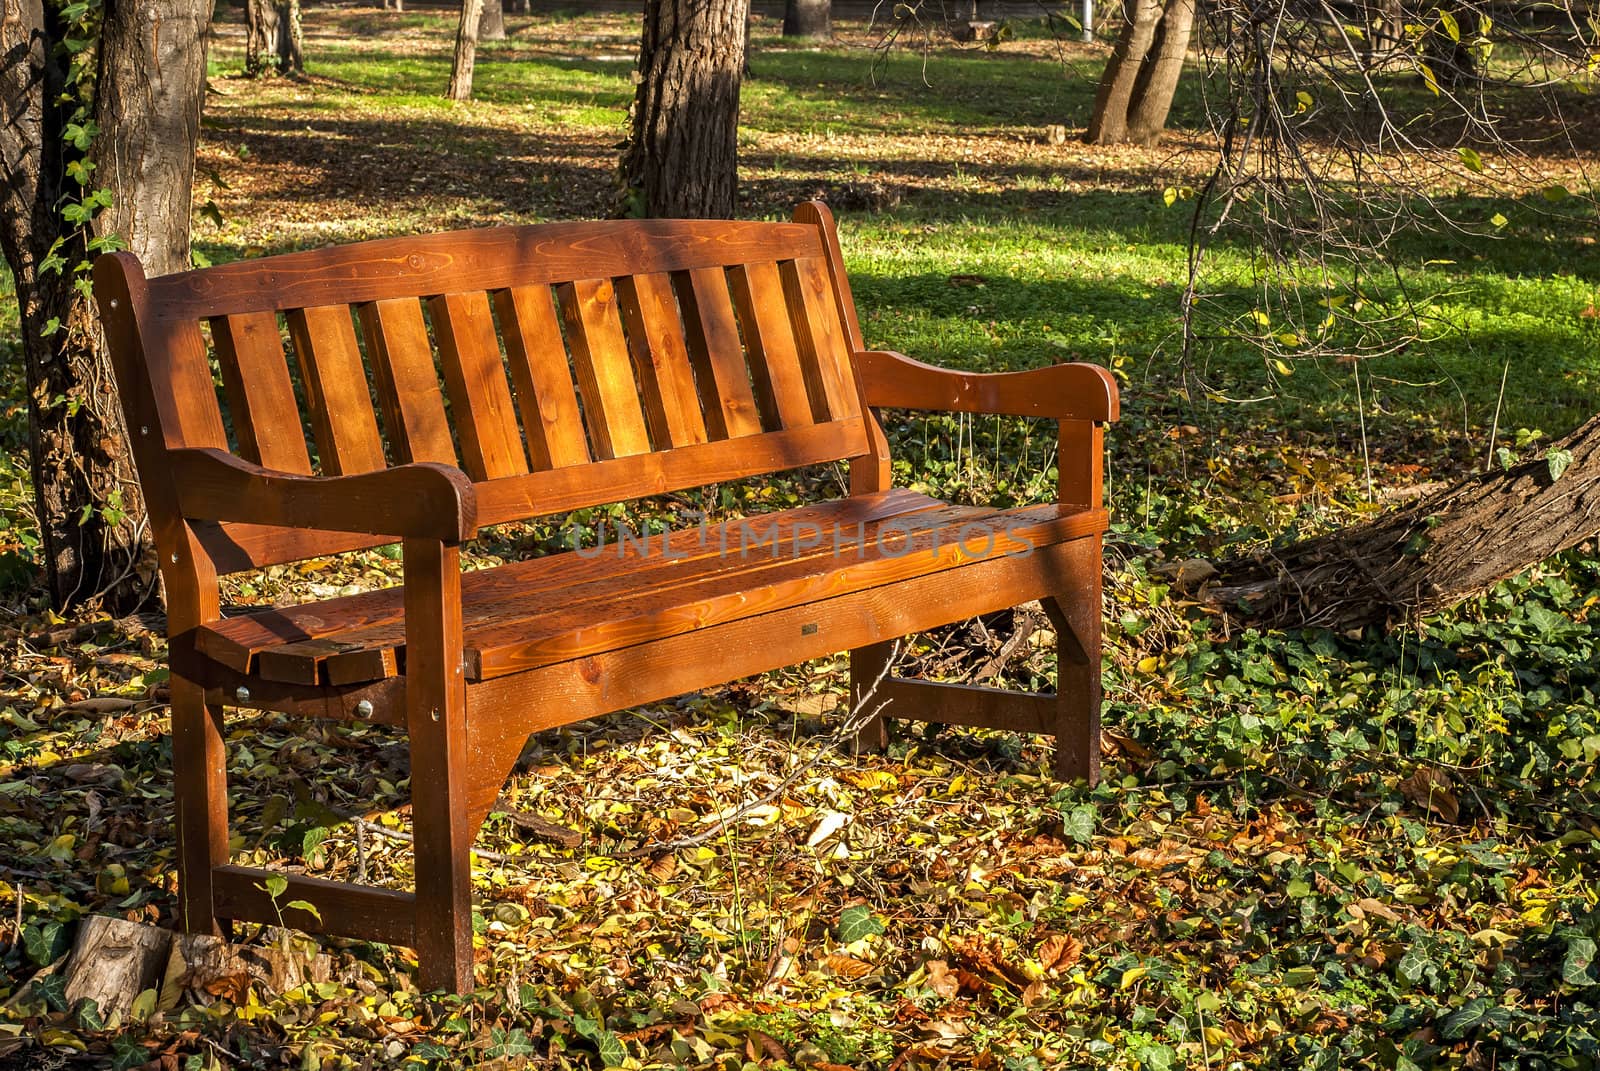 Wooden varnished brown bench in autumn park ground